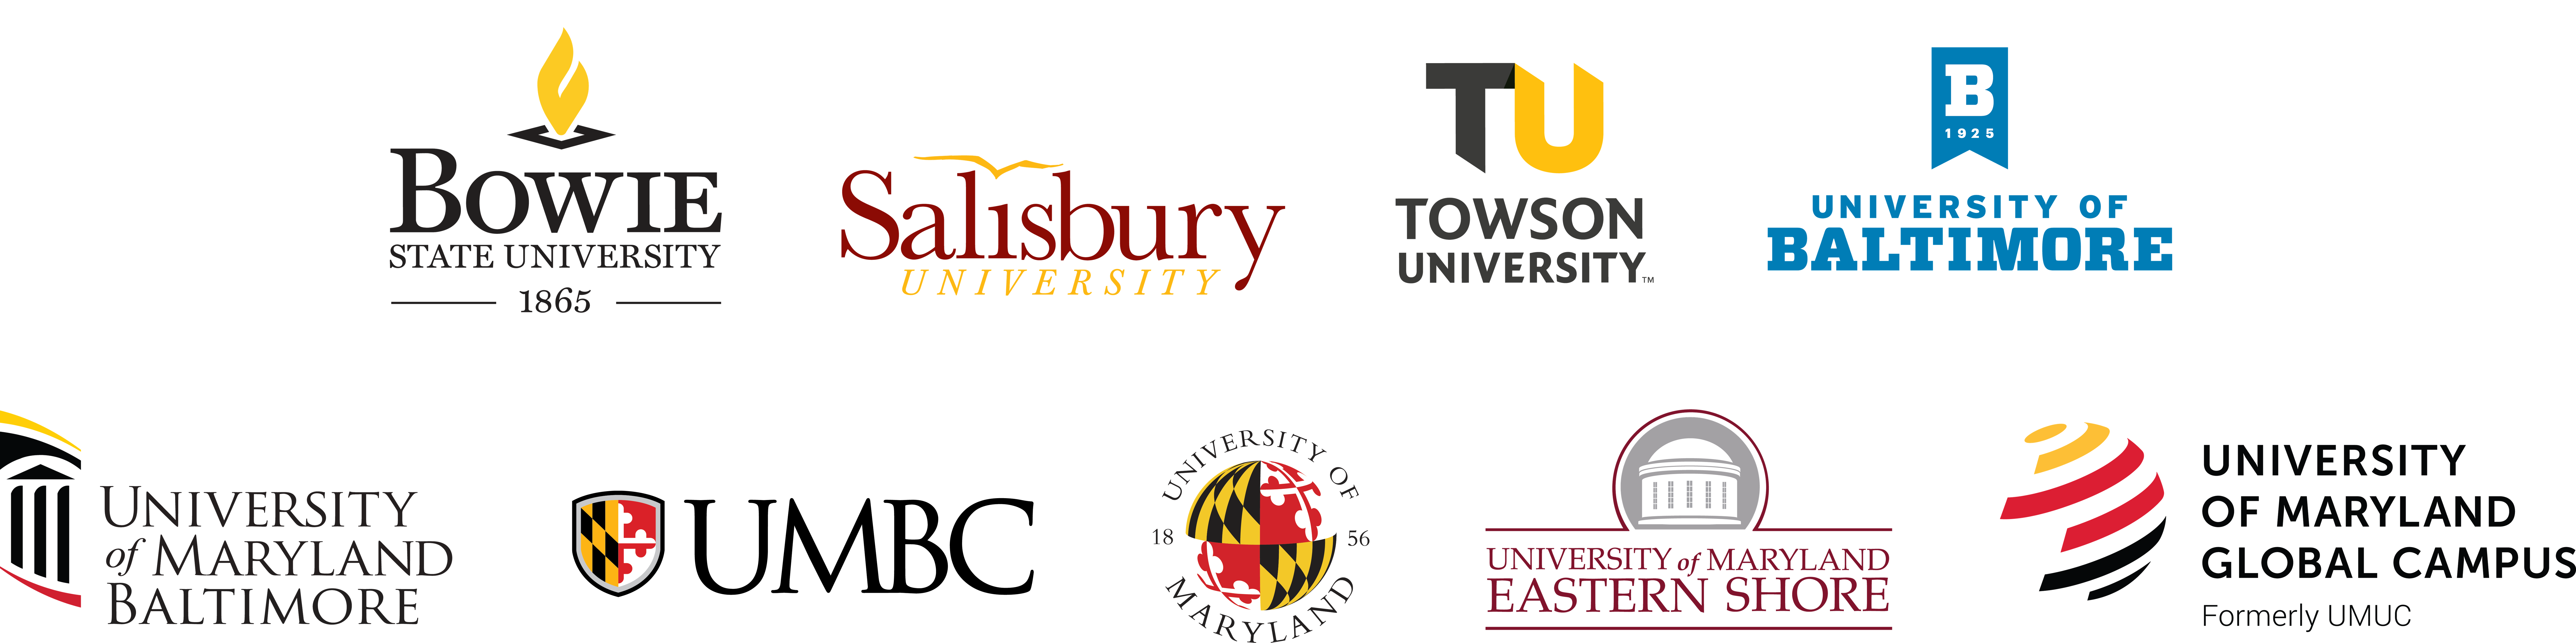 9 universities